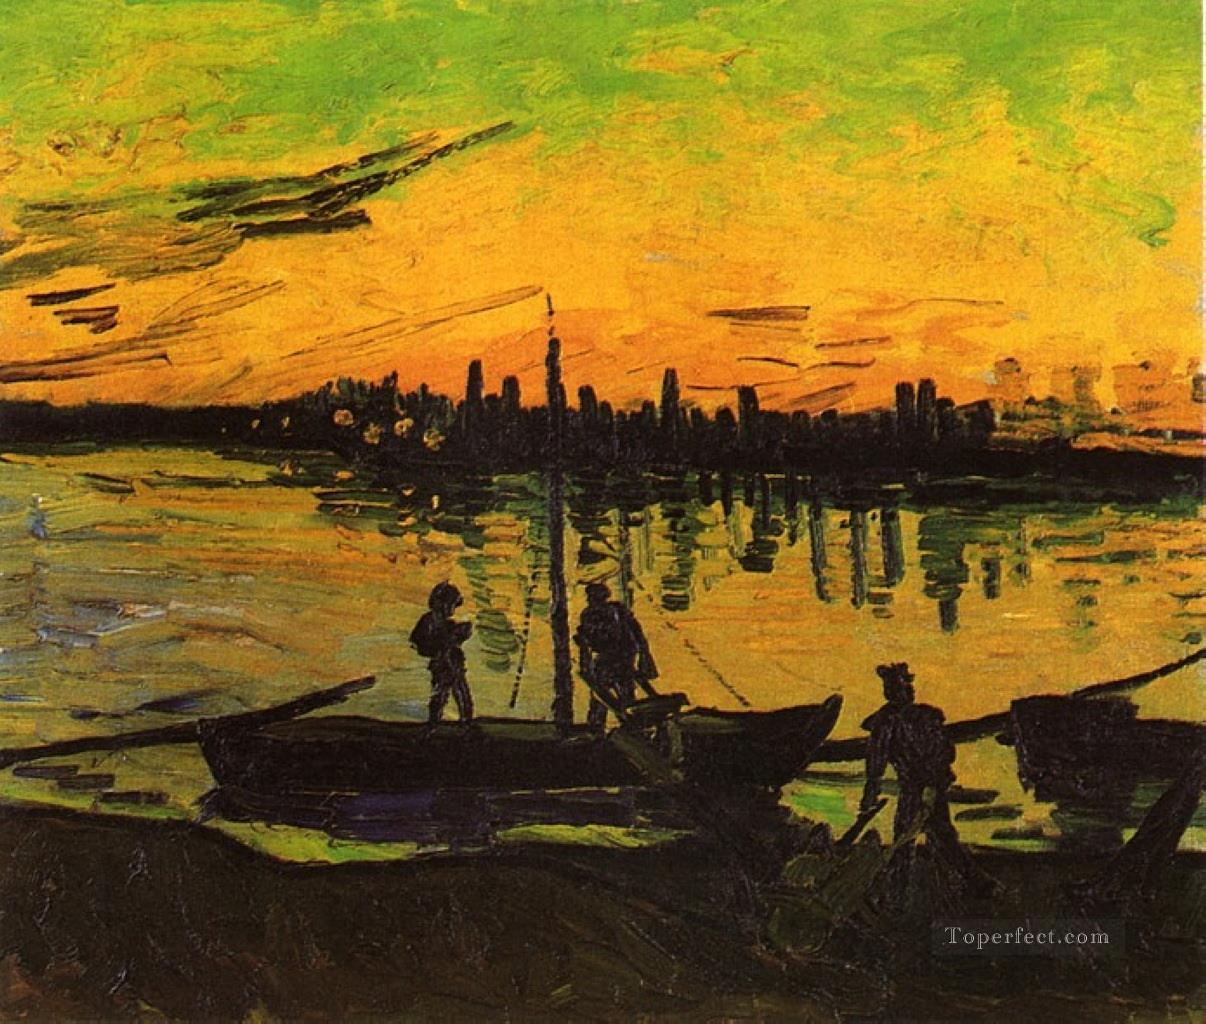 Coal Barges 2 Vincent van Gogh Oil Paintings